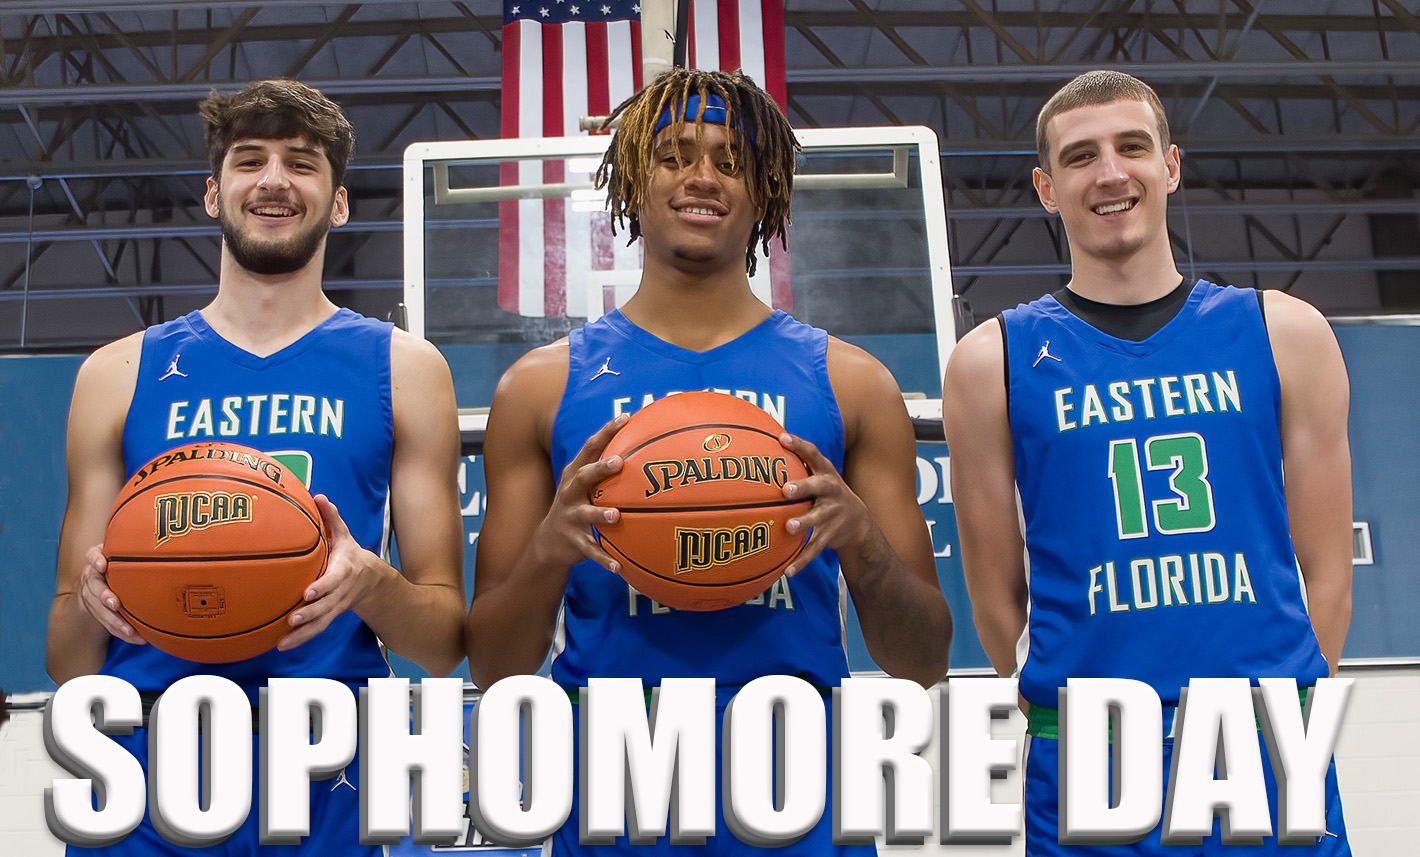 Men's basketball team to recognize Sophomores Saturday